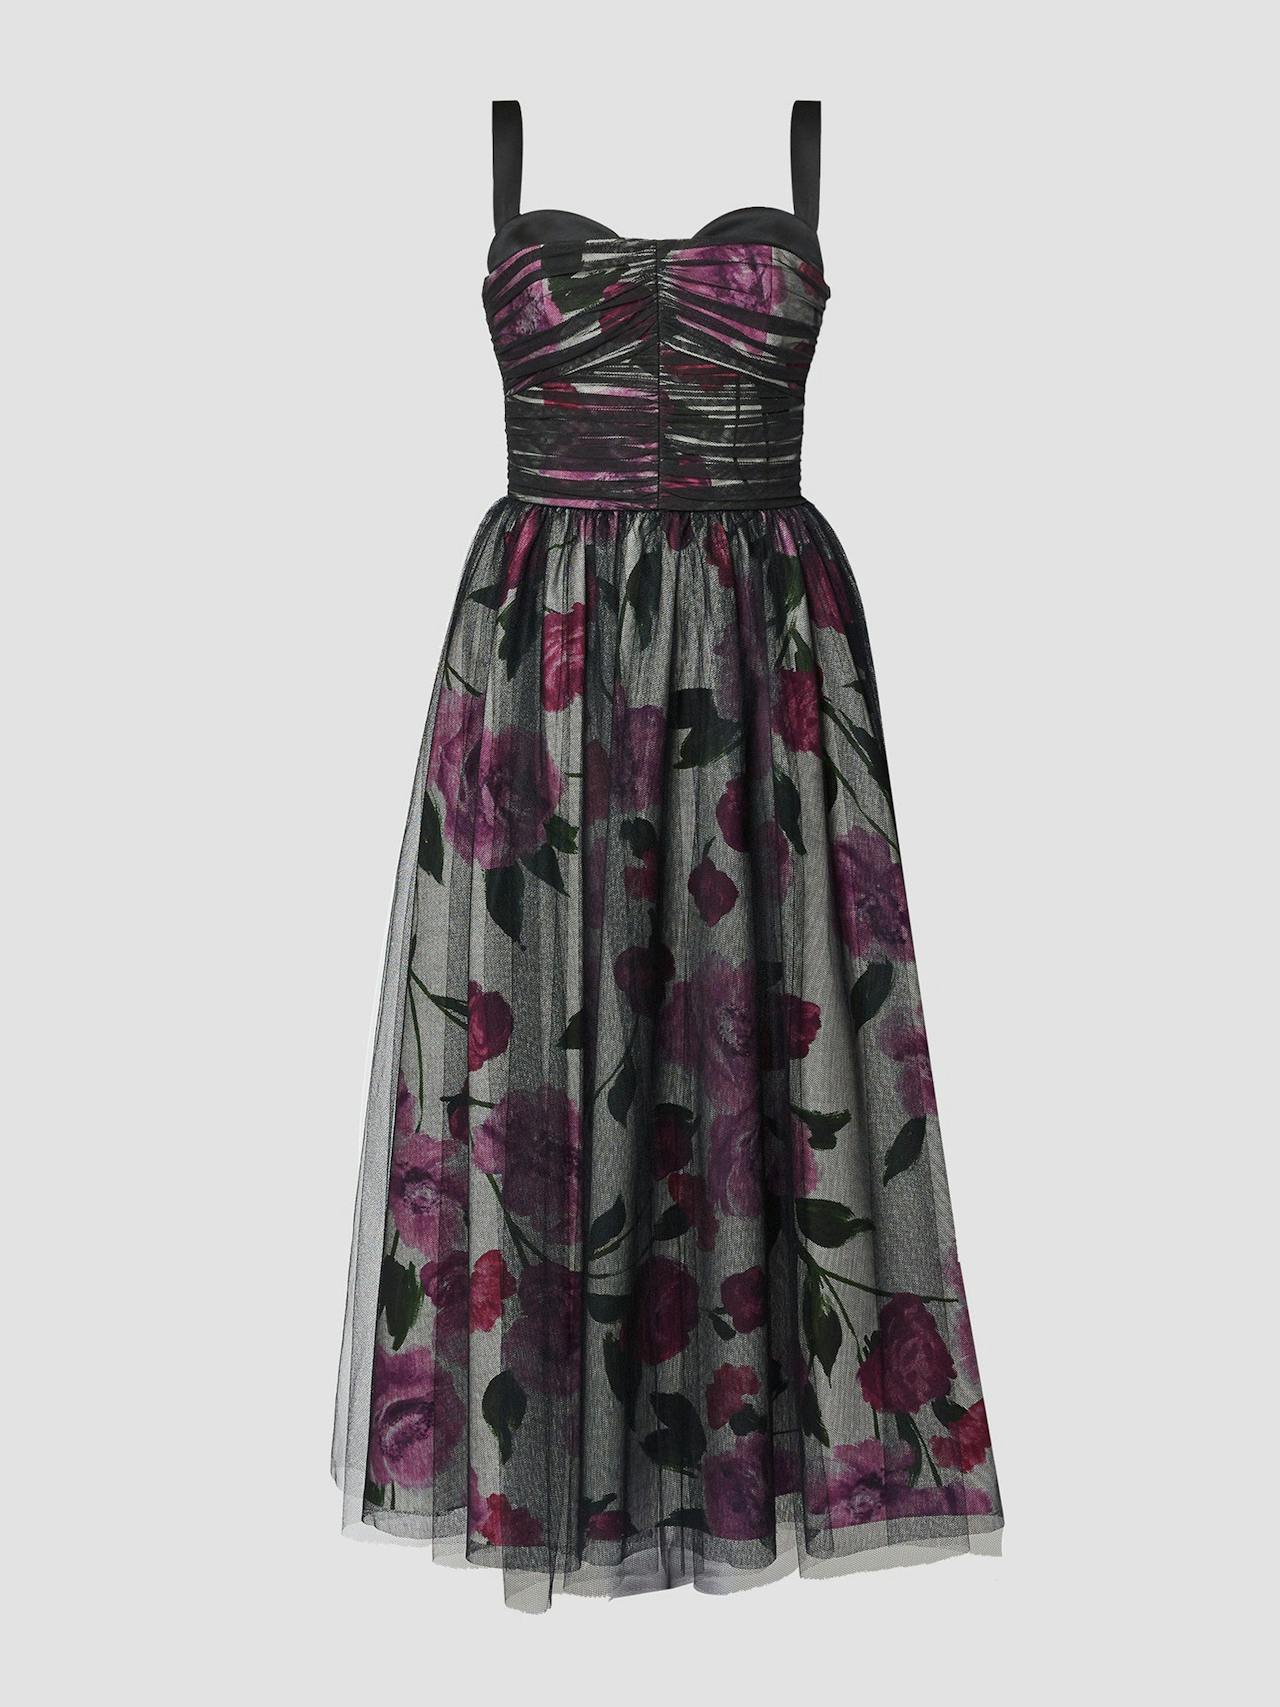 Sleeveless dress with tulle overlay